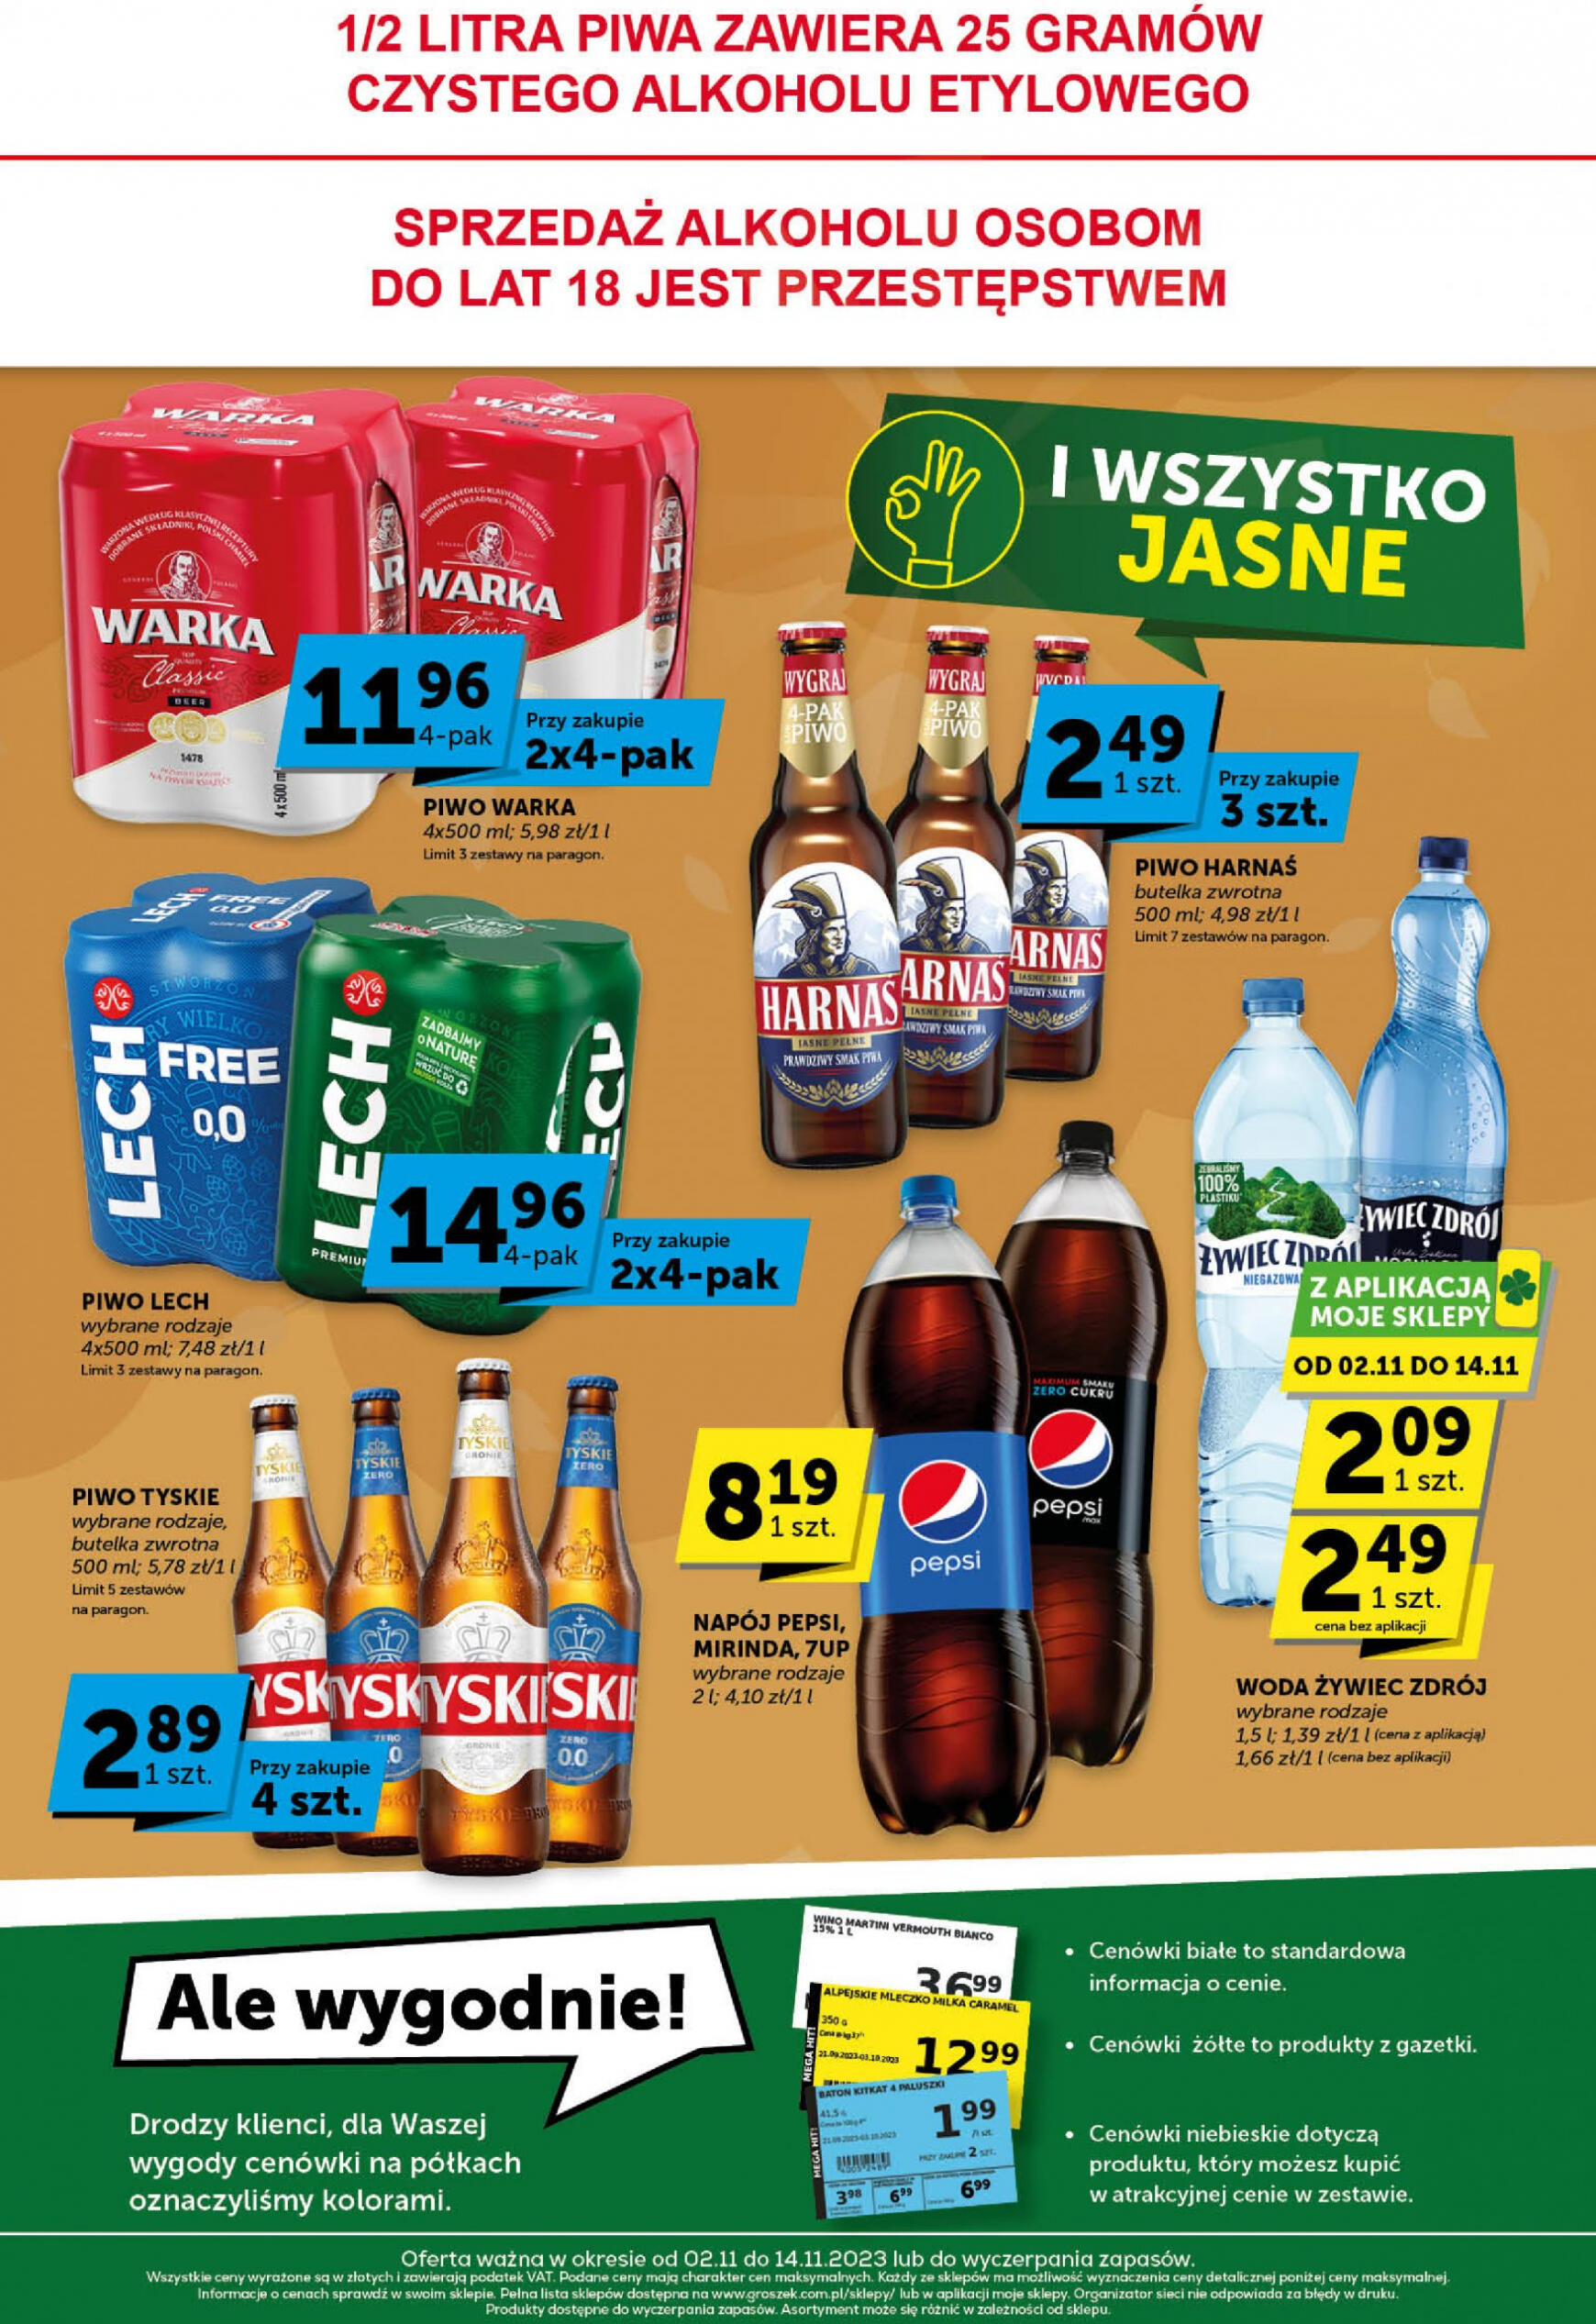 groszek - Groszek Minimarket - page: 4